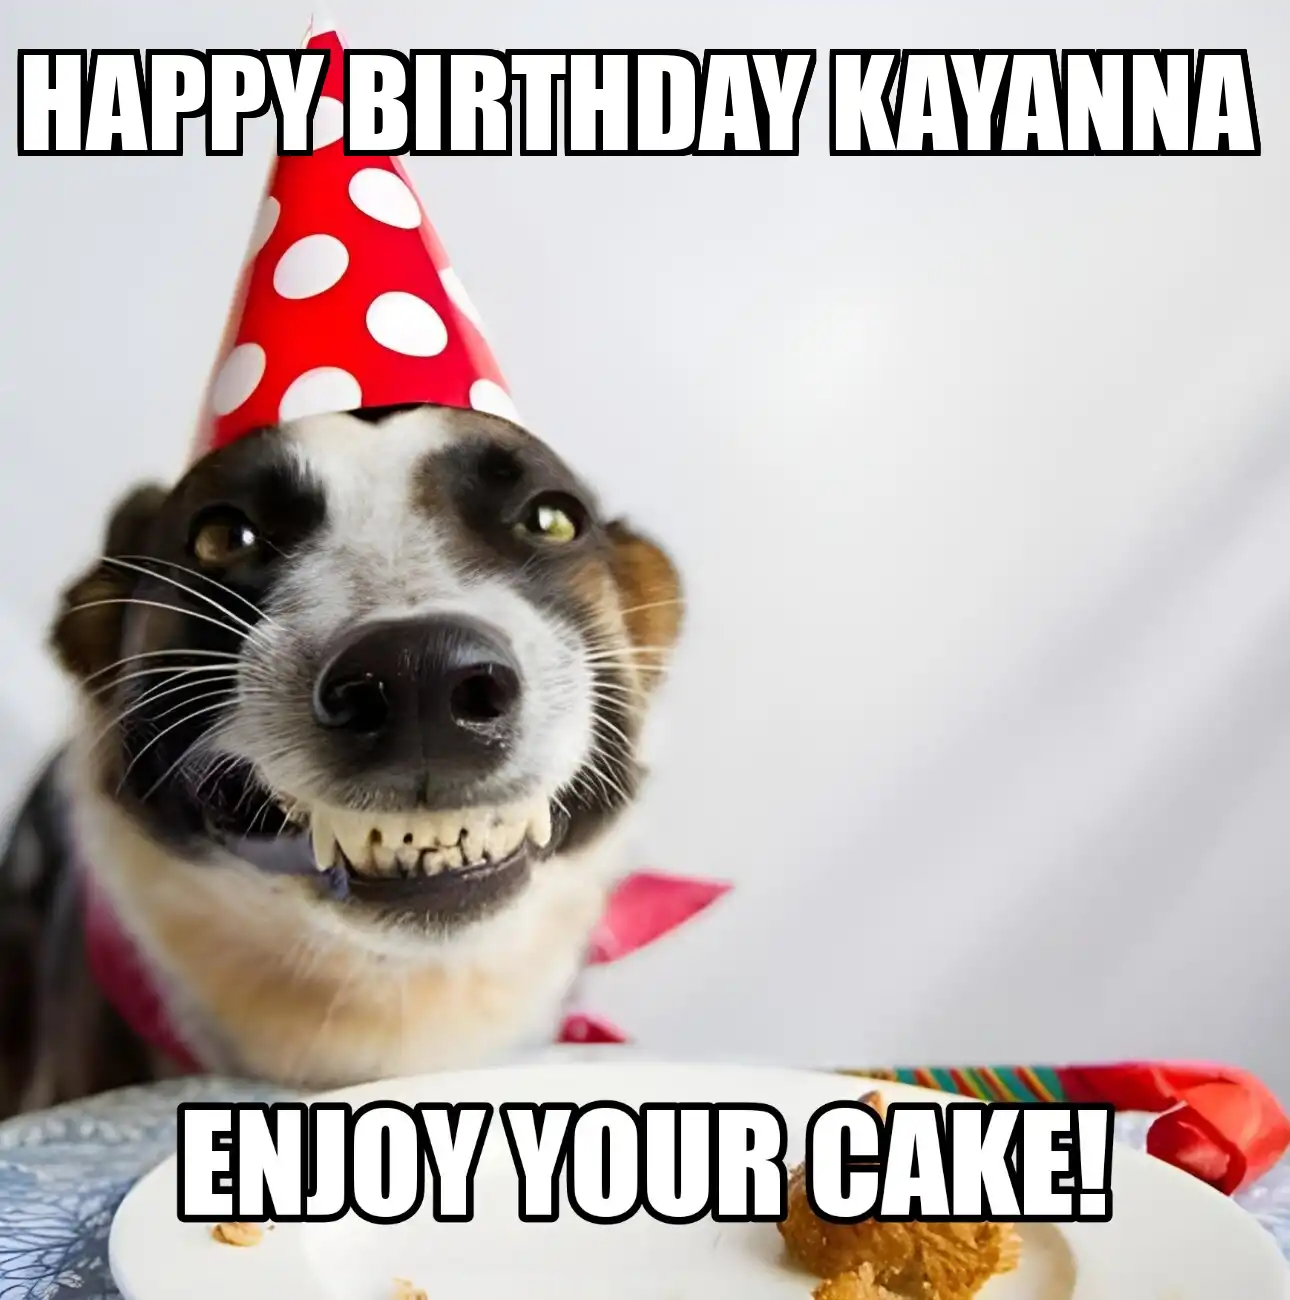 Happy Birthday Kayanna Enjoy Your Cake Dog Meme